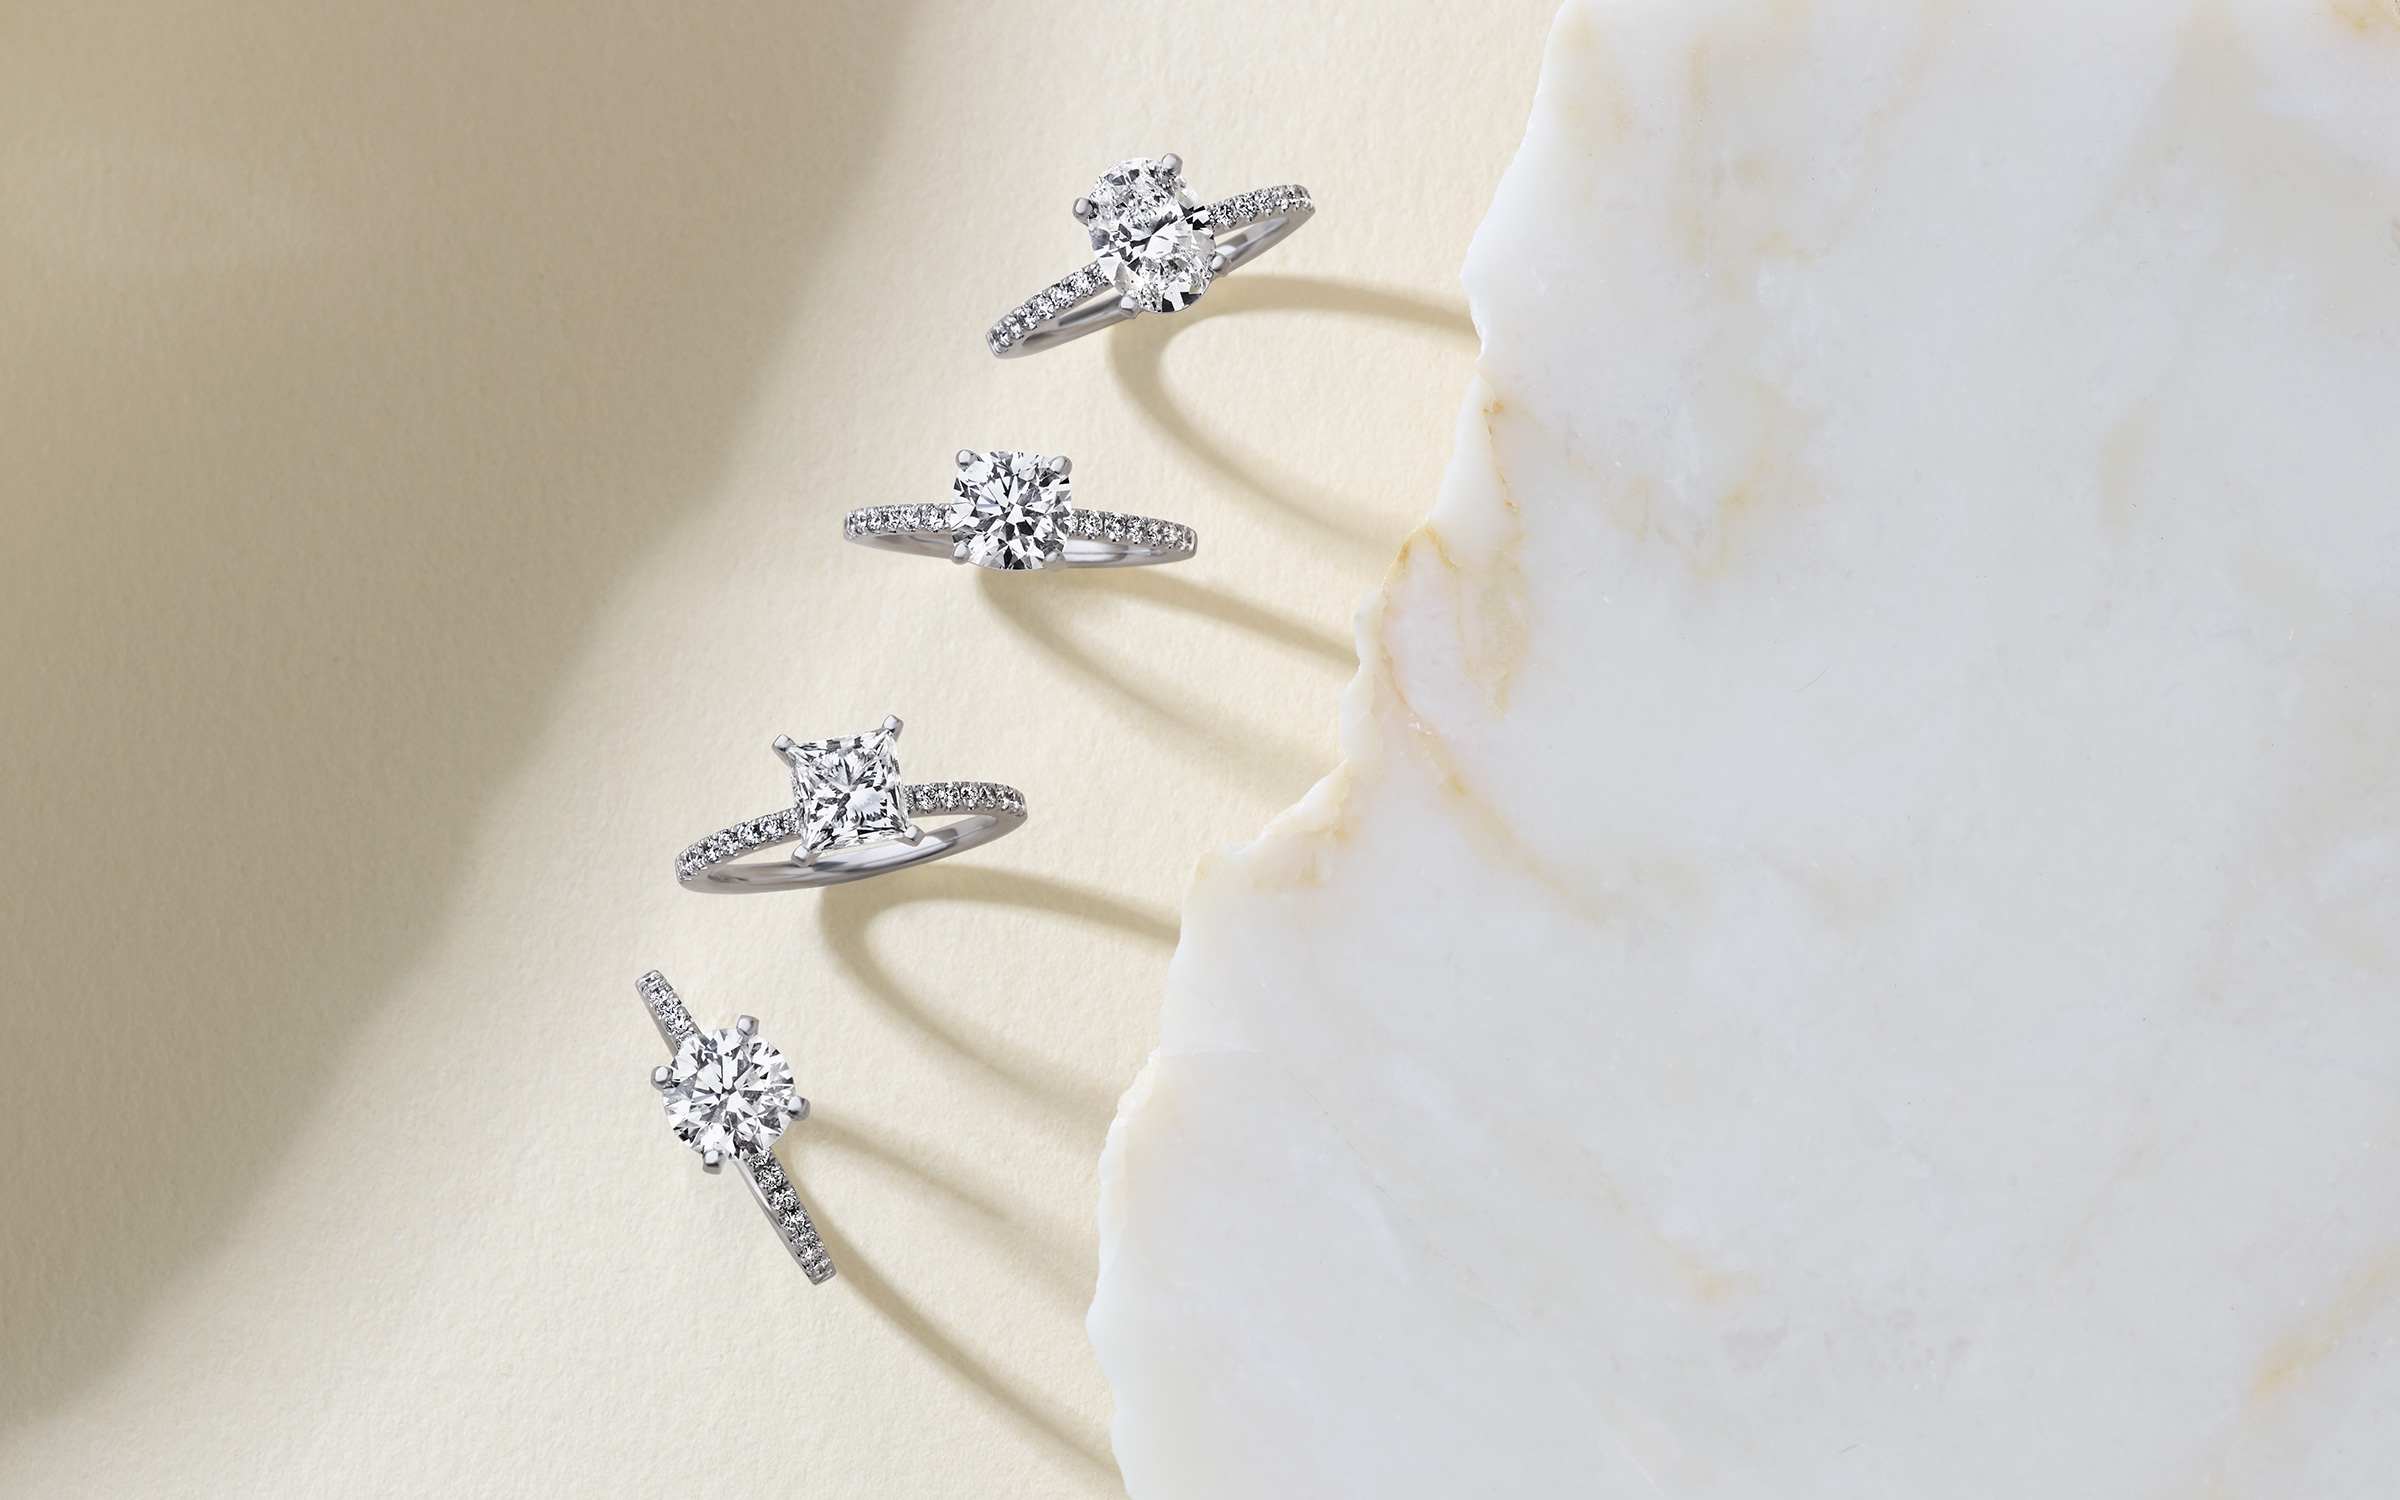 Four diamond engagement rings.